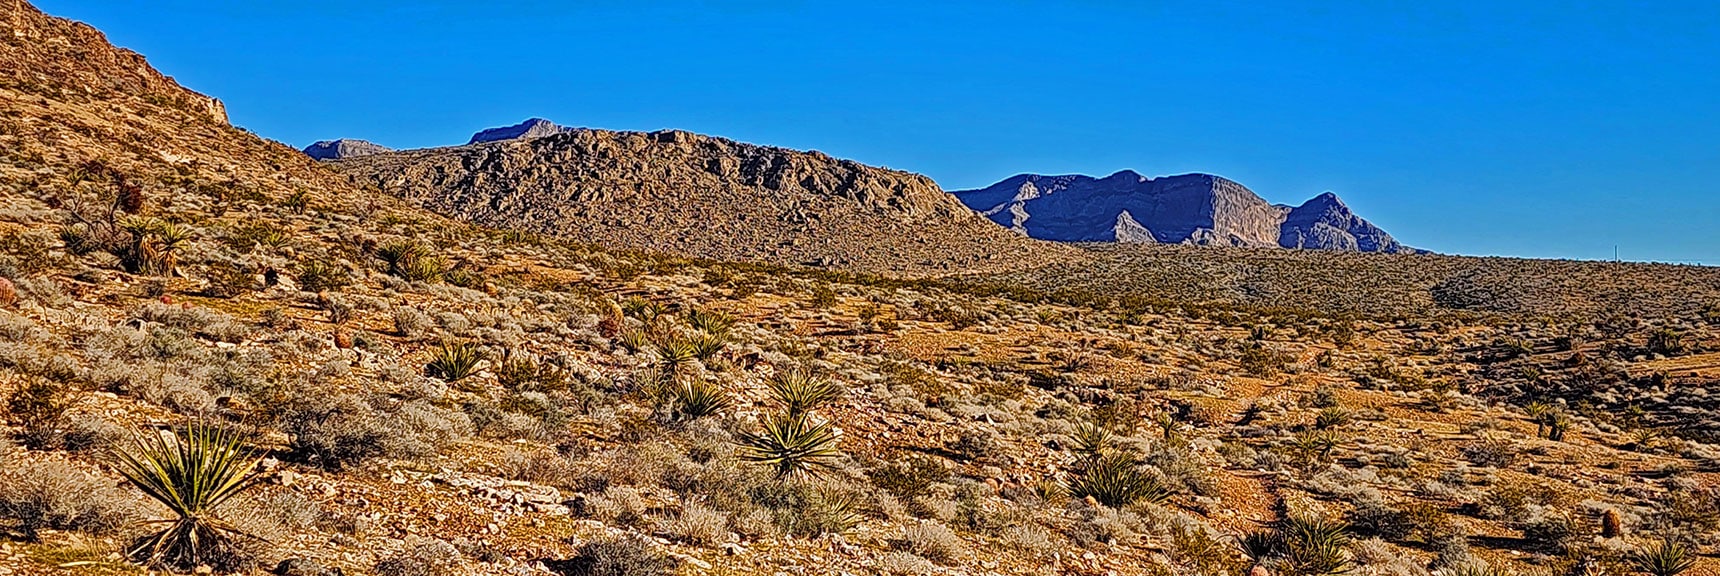 Rounding Hills Toward Brownstone Basin. Summerlin Ridge on Right | Brownstone Trail | Calico Basin | Brownstone Basin | La Madre Mountains Wilderness, Nevada